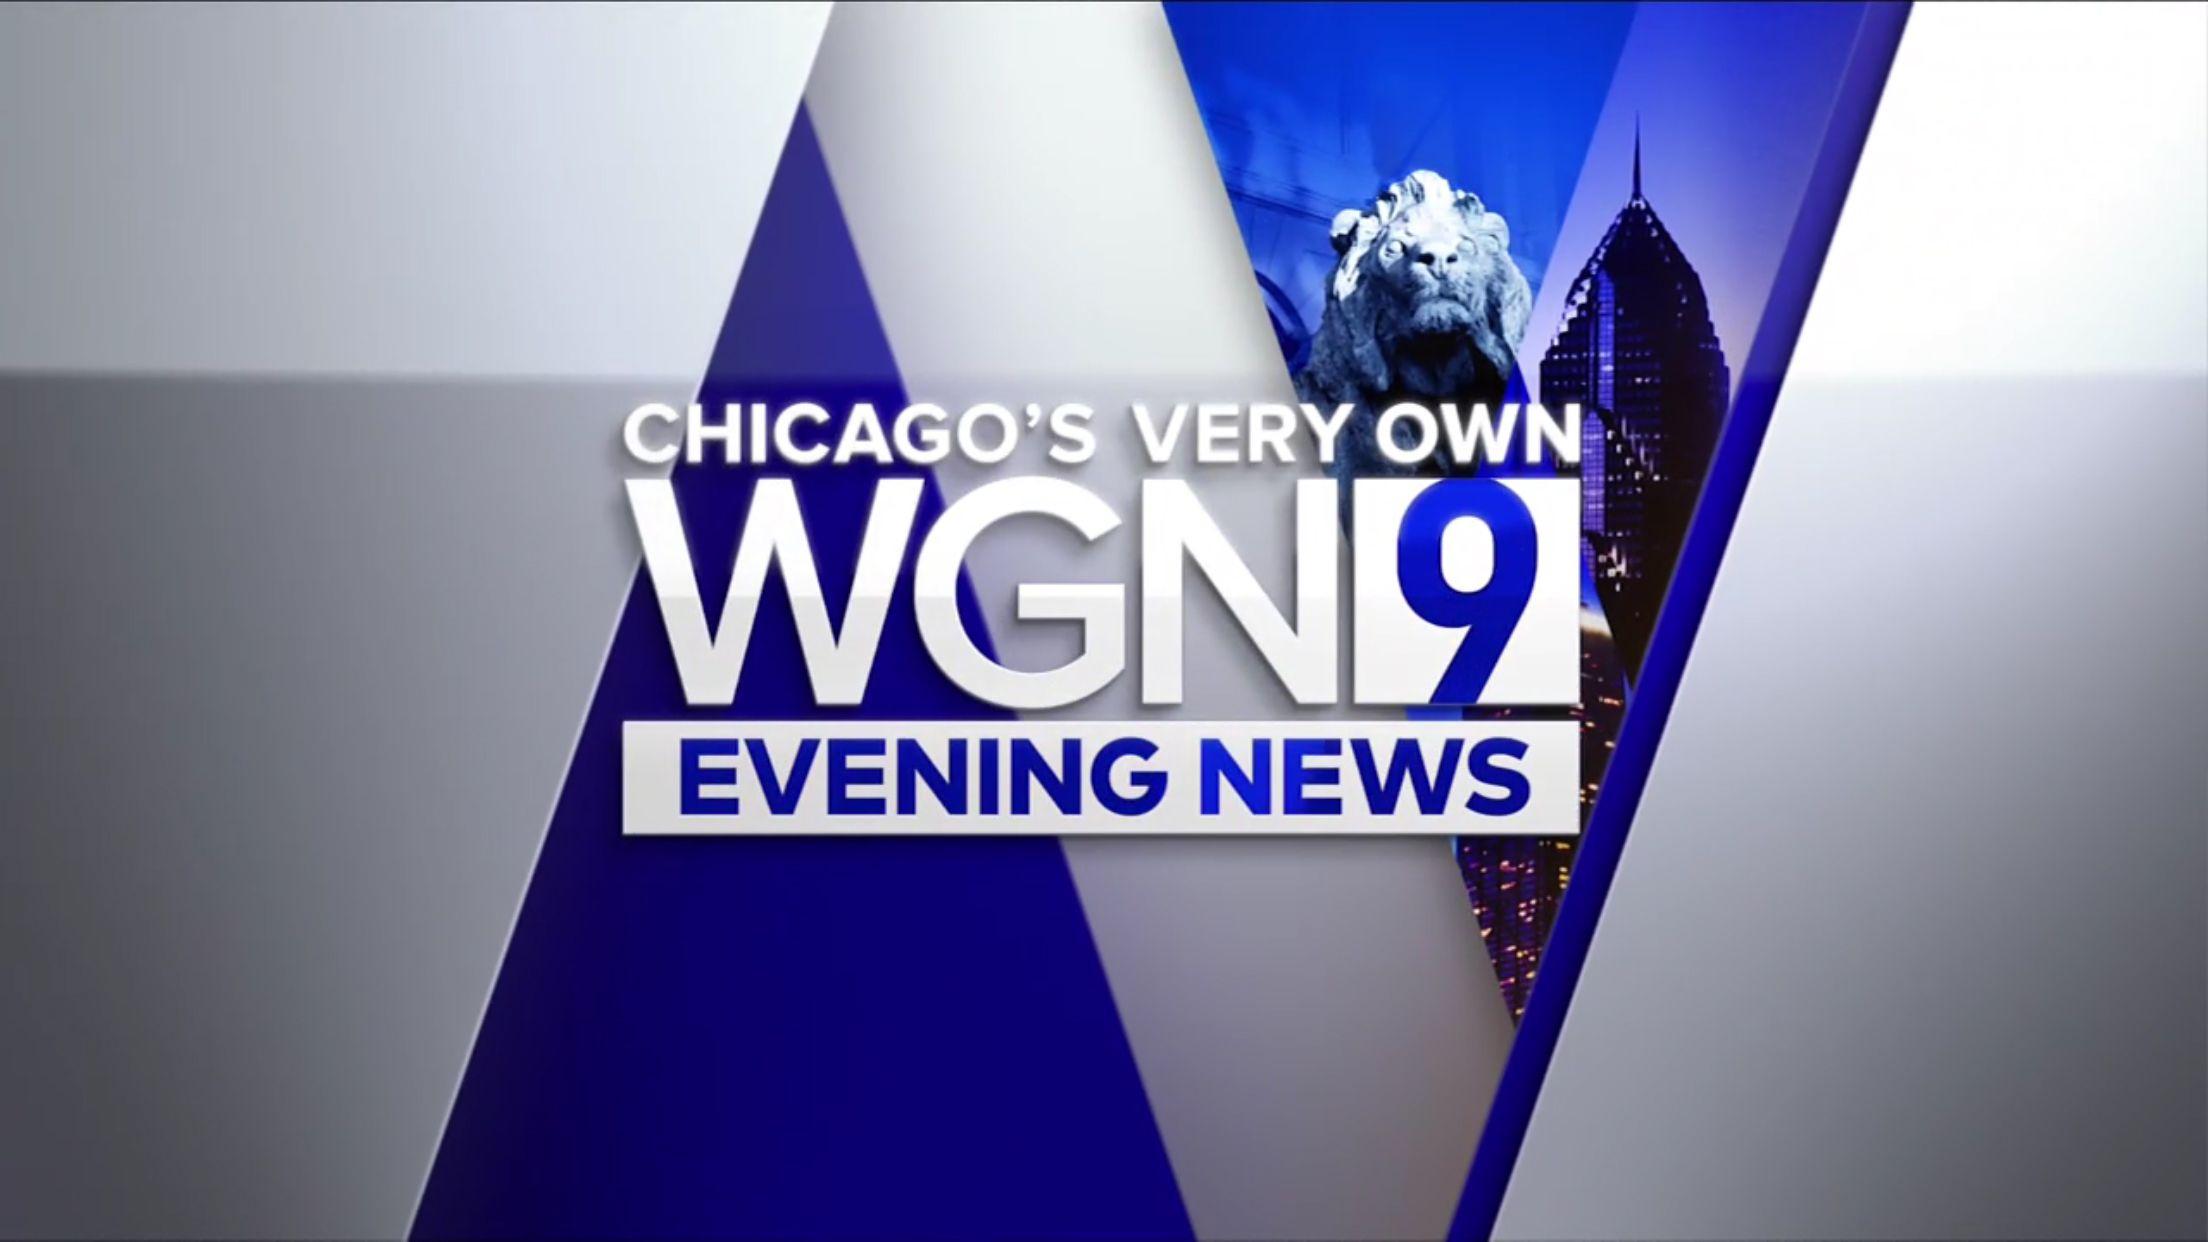 WGN Chicago Logo - Chicago's very own' draws on city for inspiration - NewscastStudio